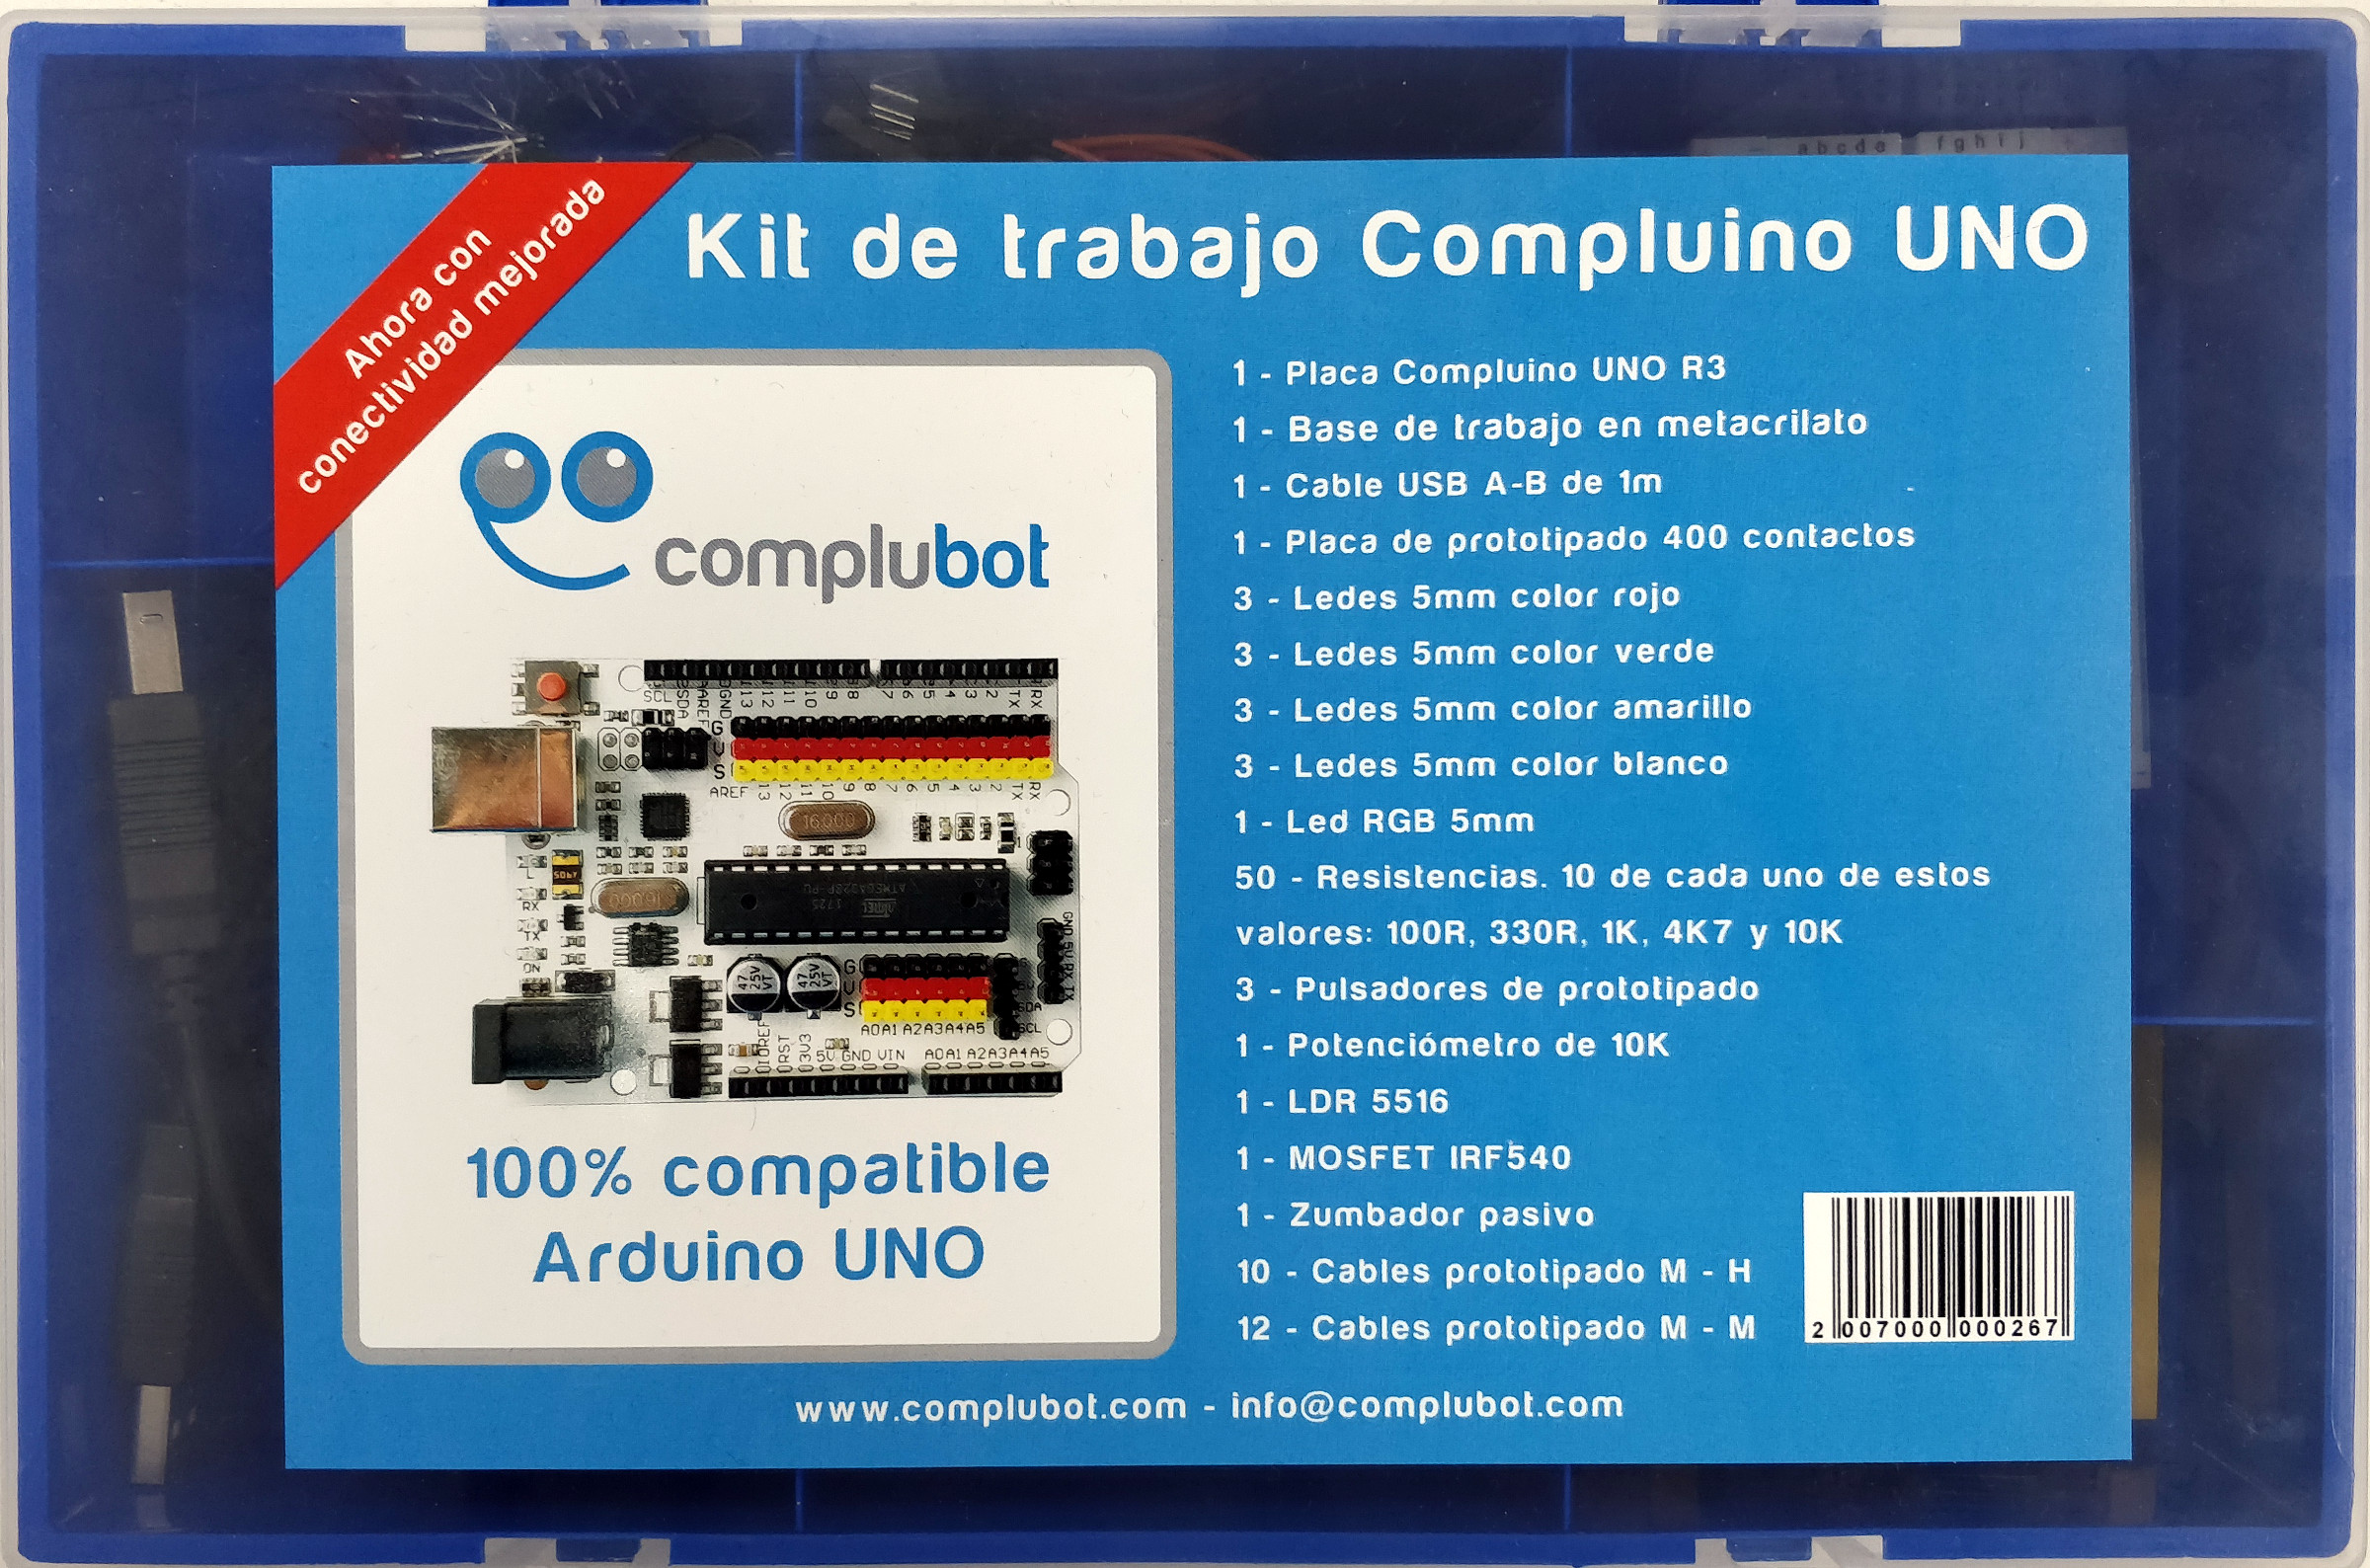 Kit_Compluino_Uno_01